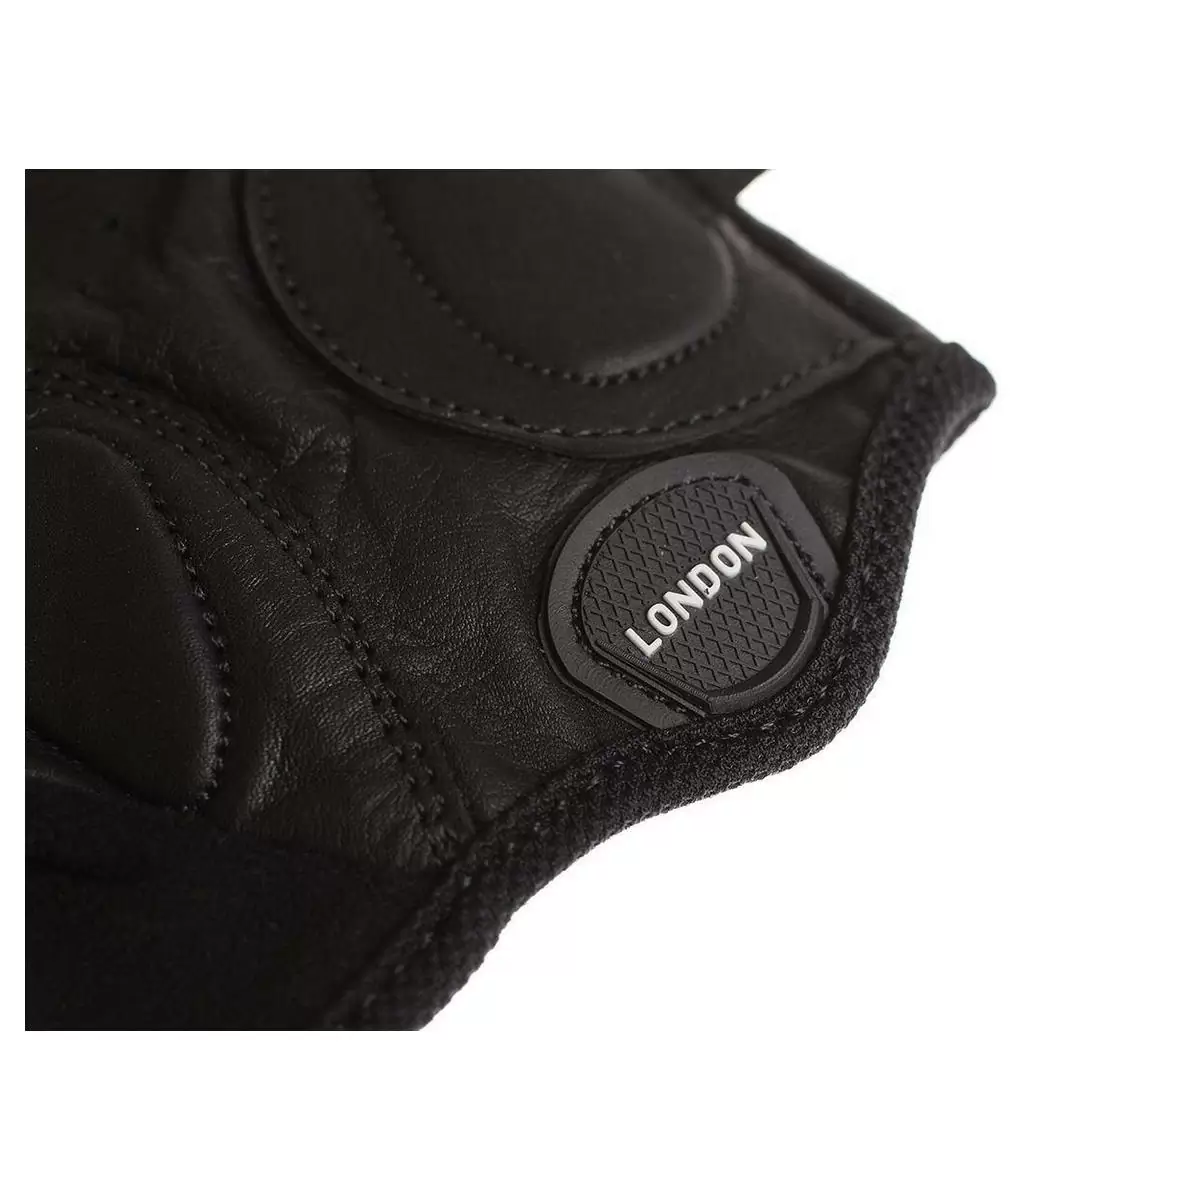 leather gloves classic sport size xxl black #4